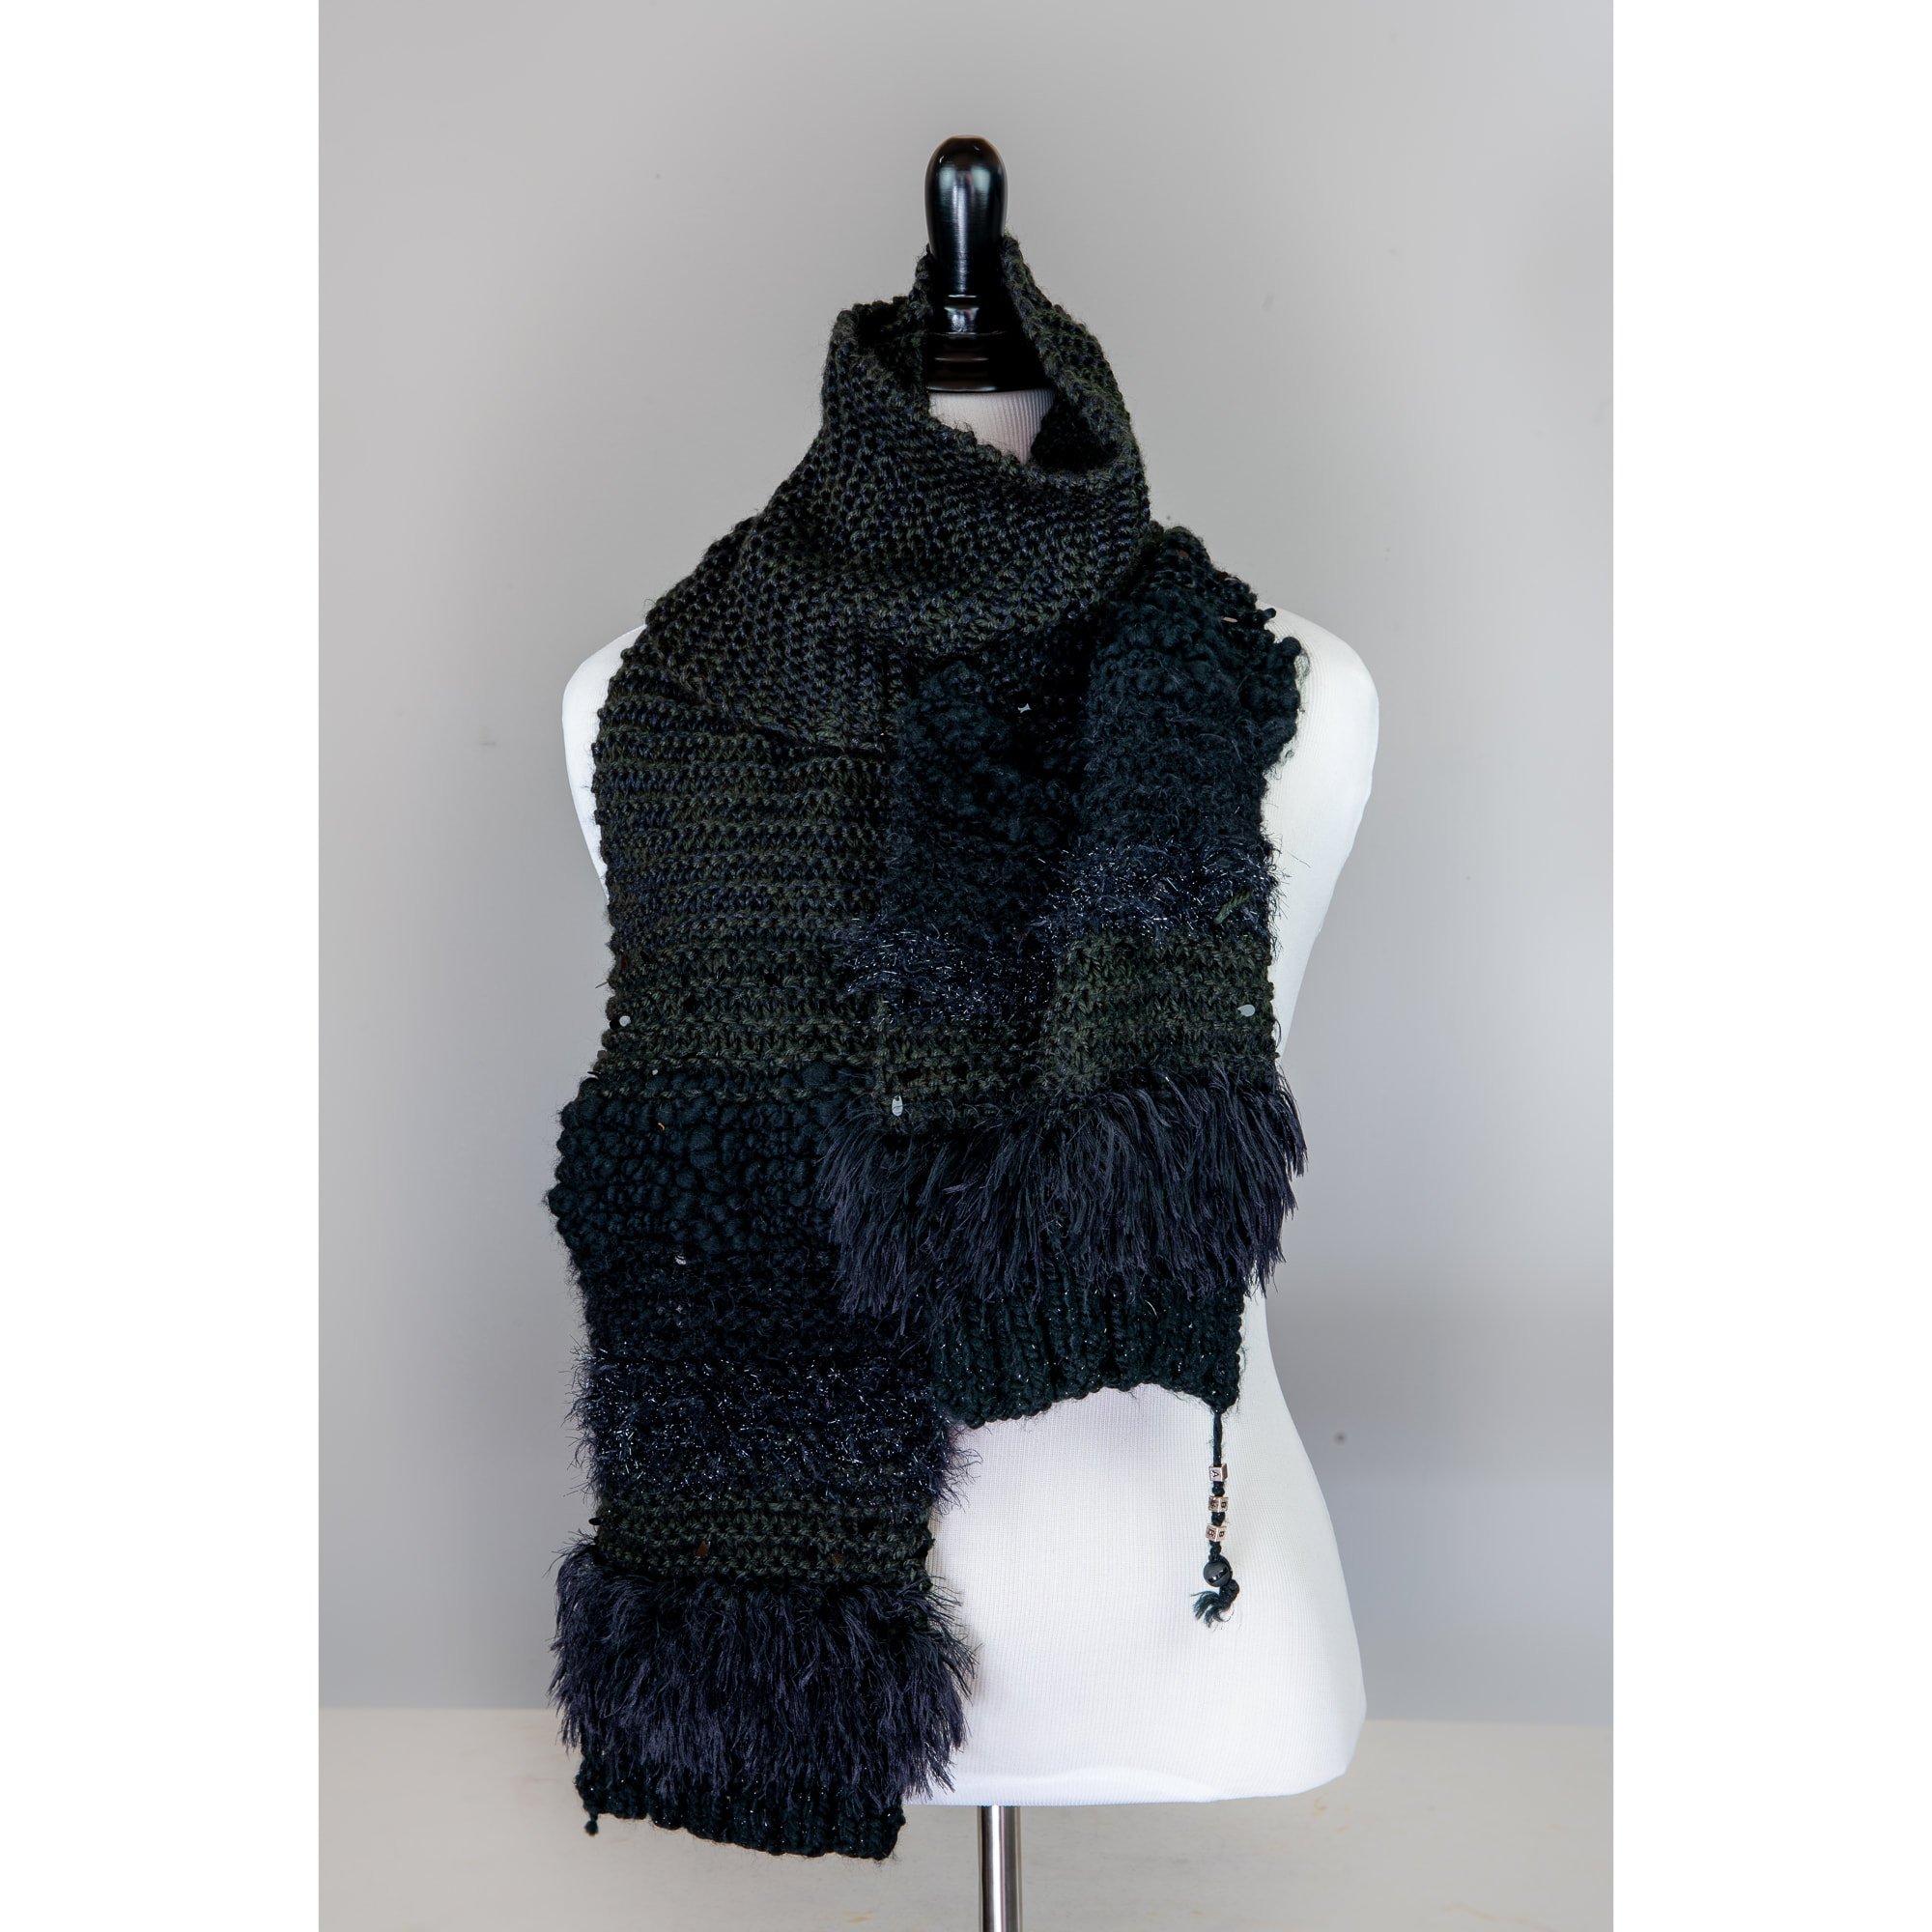 Hand Knit Soft Black Scarf By Adrienne Belafonte Biesemeyer
 Adrienne Belafonte Biesemeyer